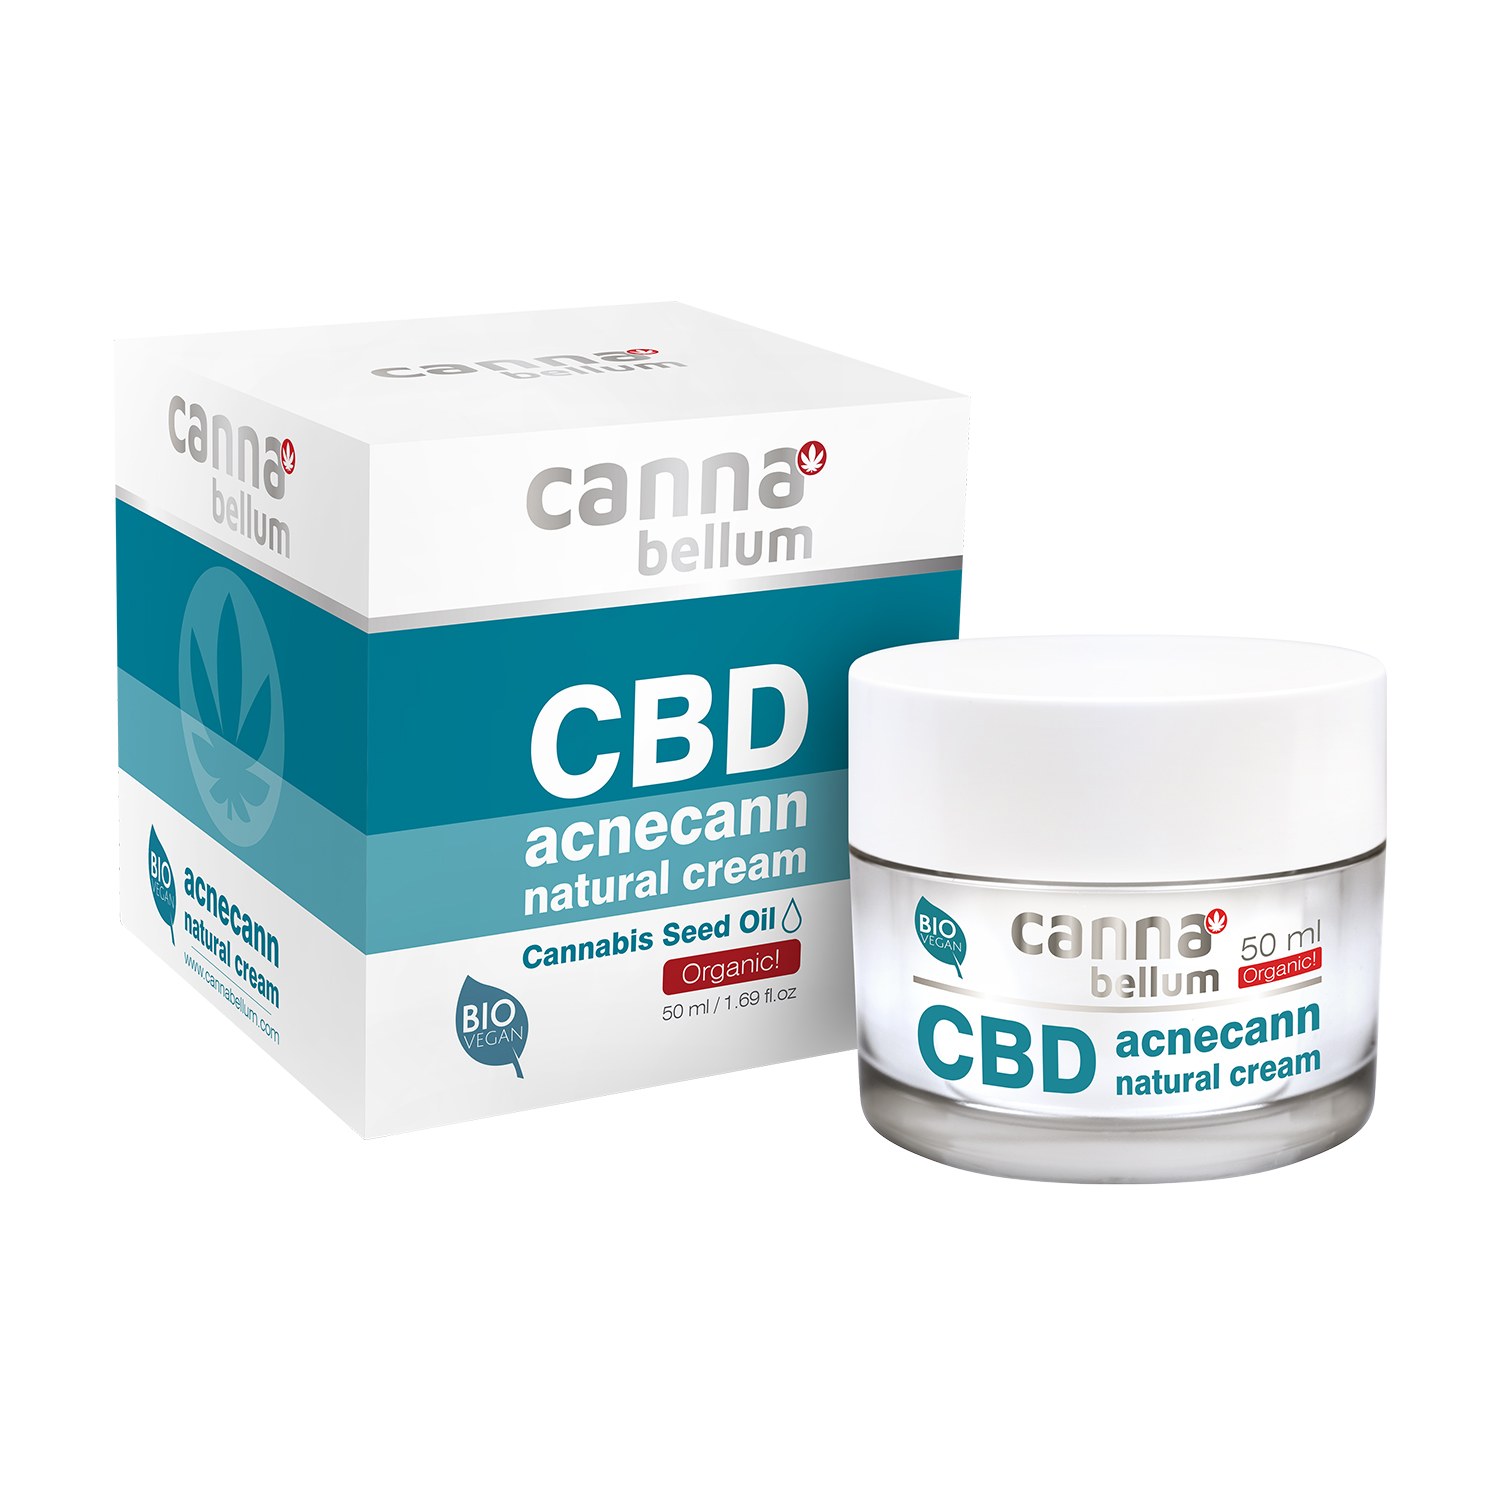 Cannabellum CBD acnecann natural cream 50ml P1244 komplet WEB 105